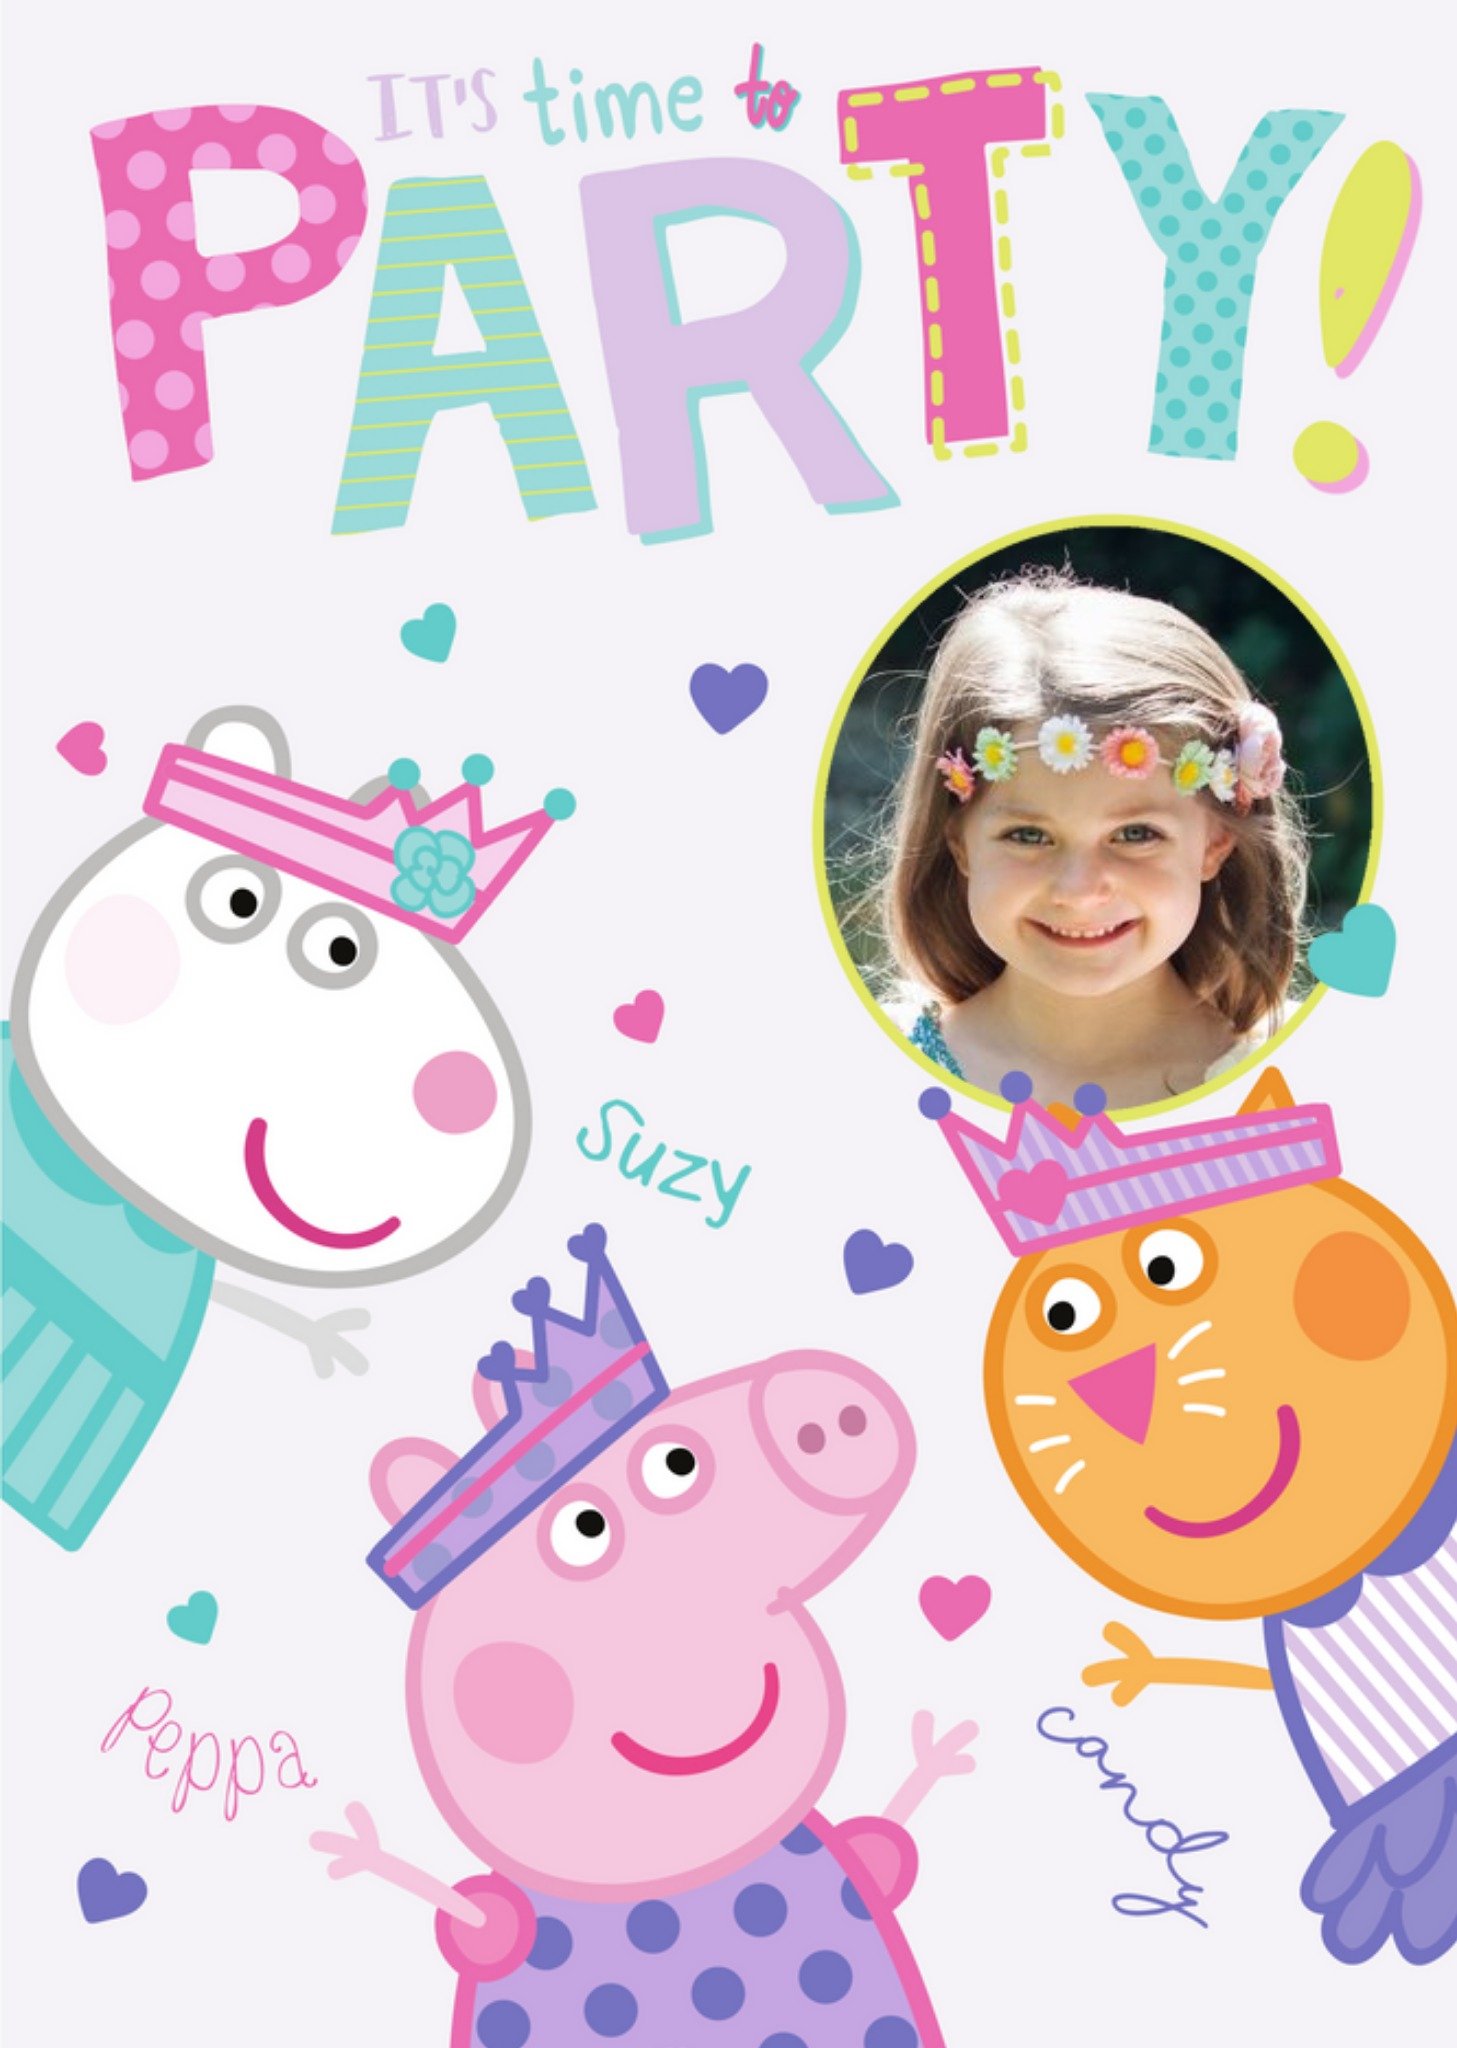 Peppa Pig Party Invitation Photo Upload Card Ecard